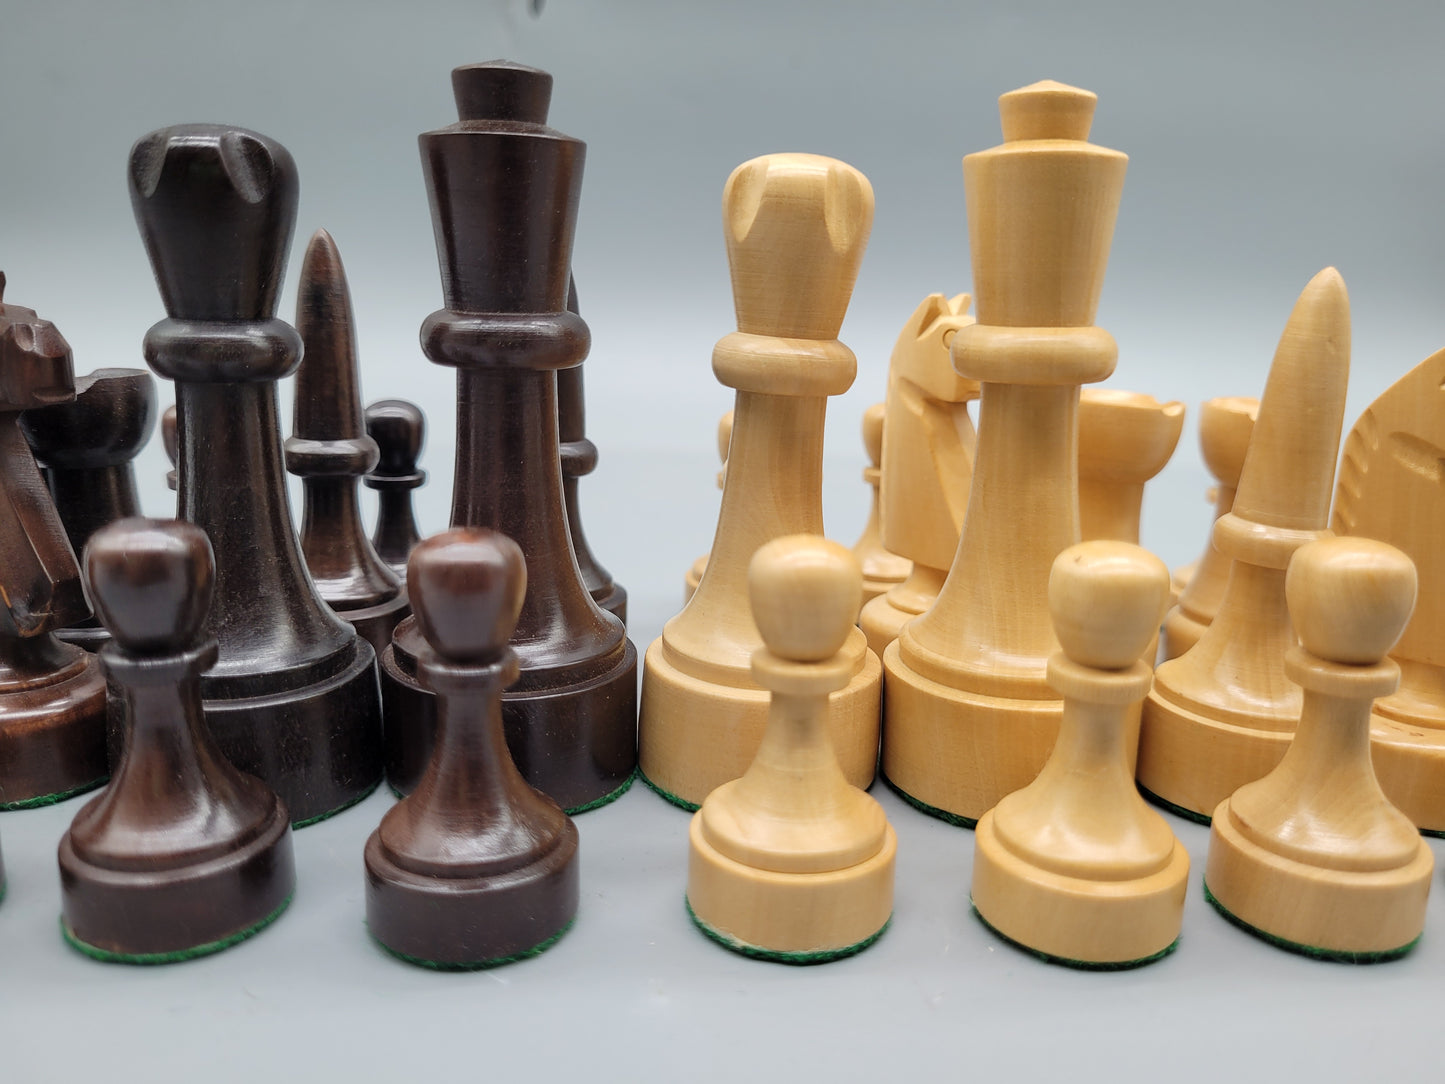 Klassisches Schachspiel, 32 Handgeschnitzte Schachfiguren